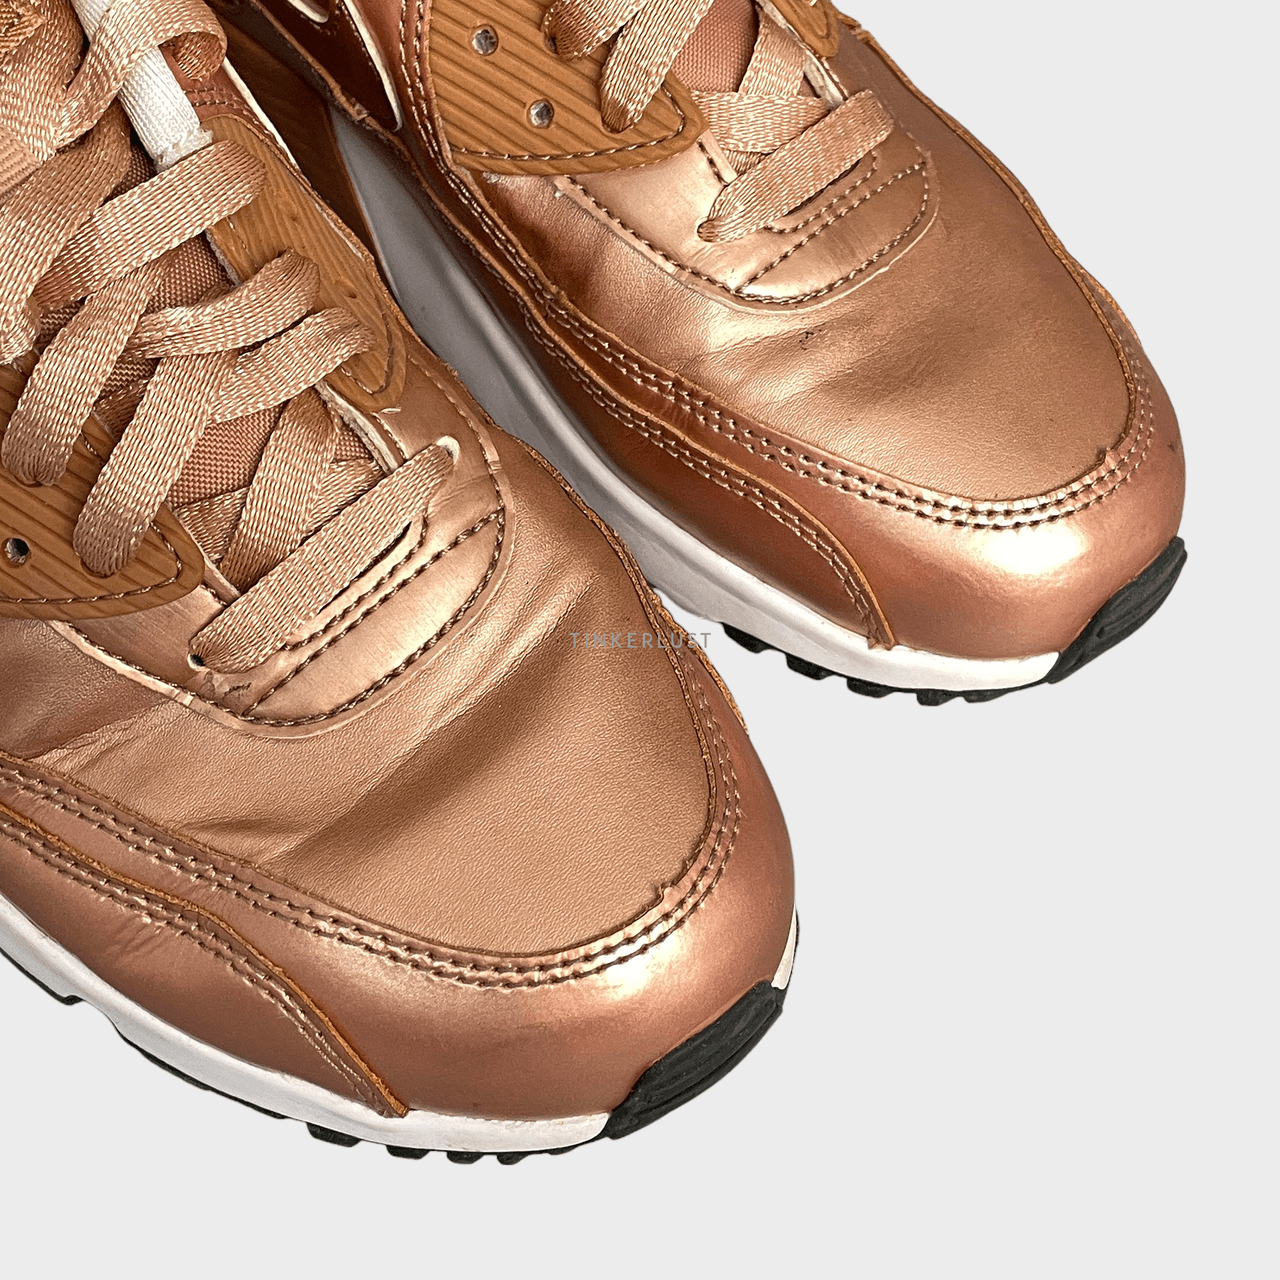 Nike Air Max 90 GS “Metallic Bronze” Shoes